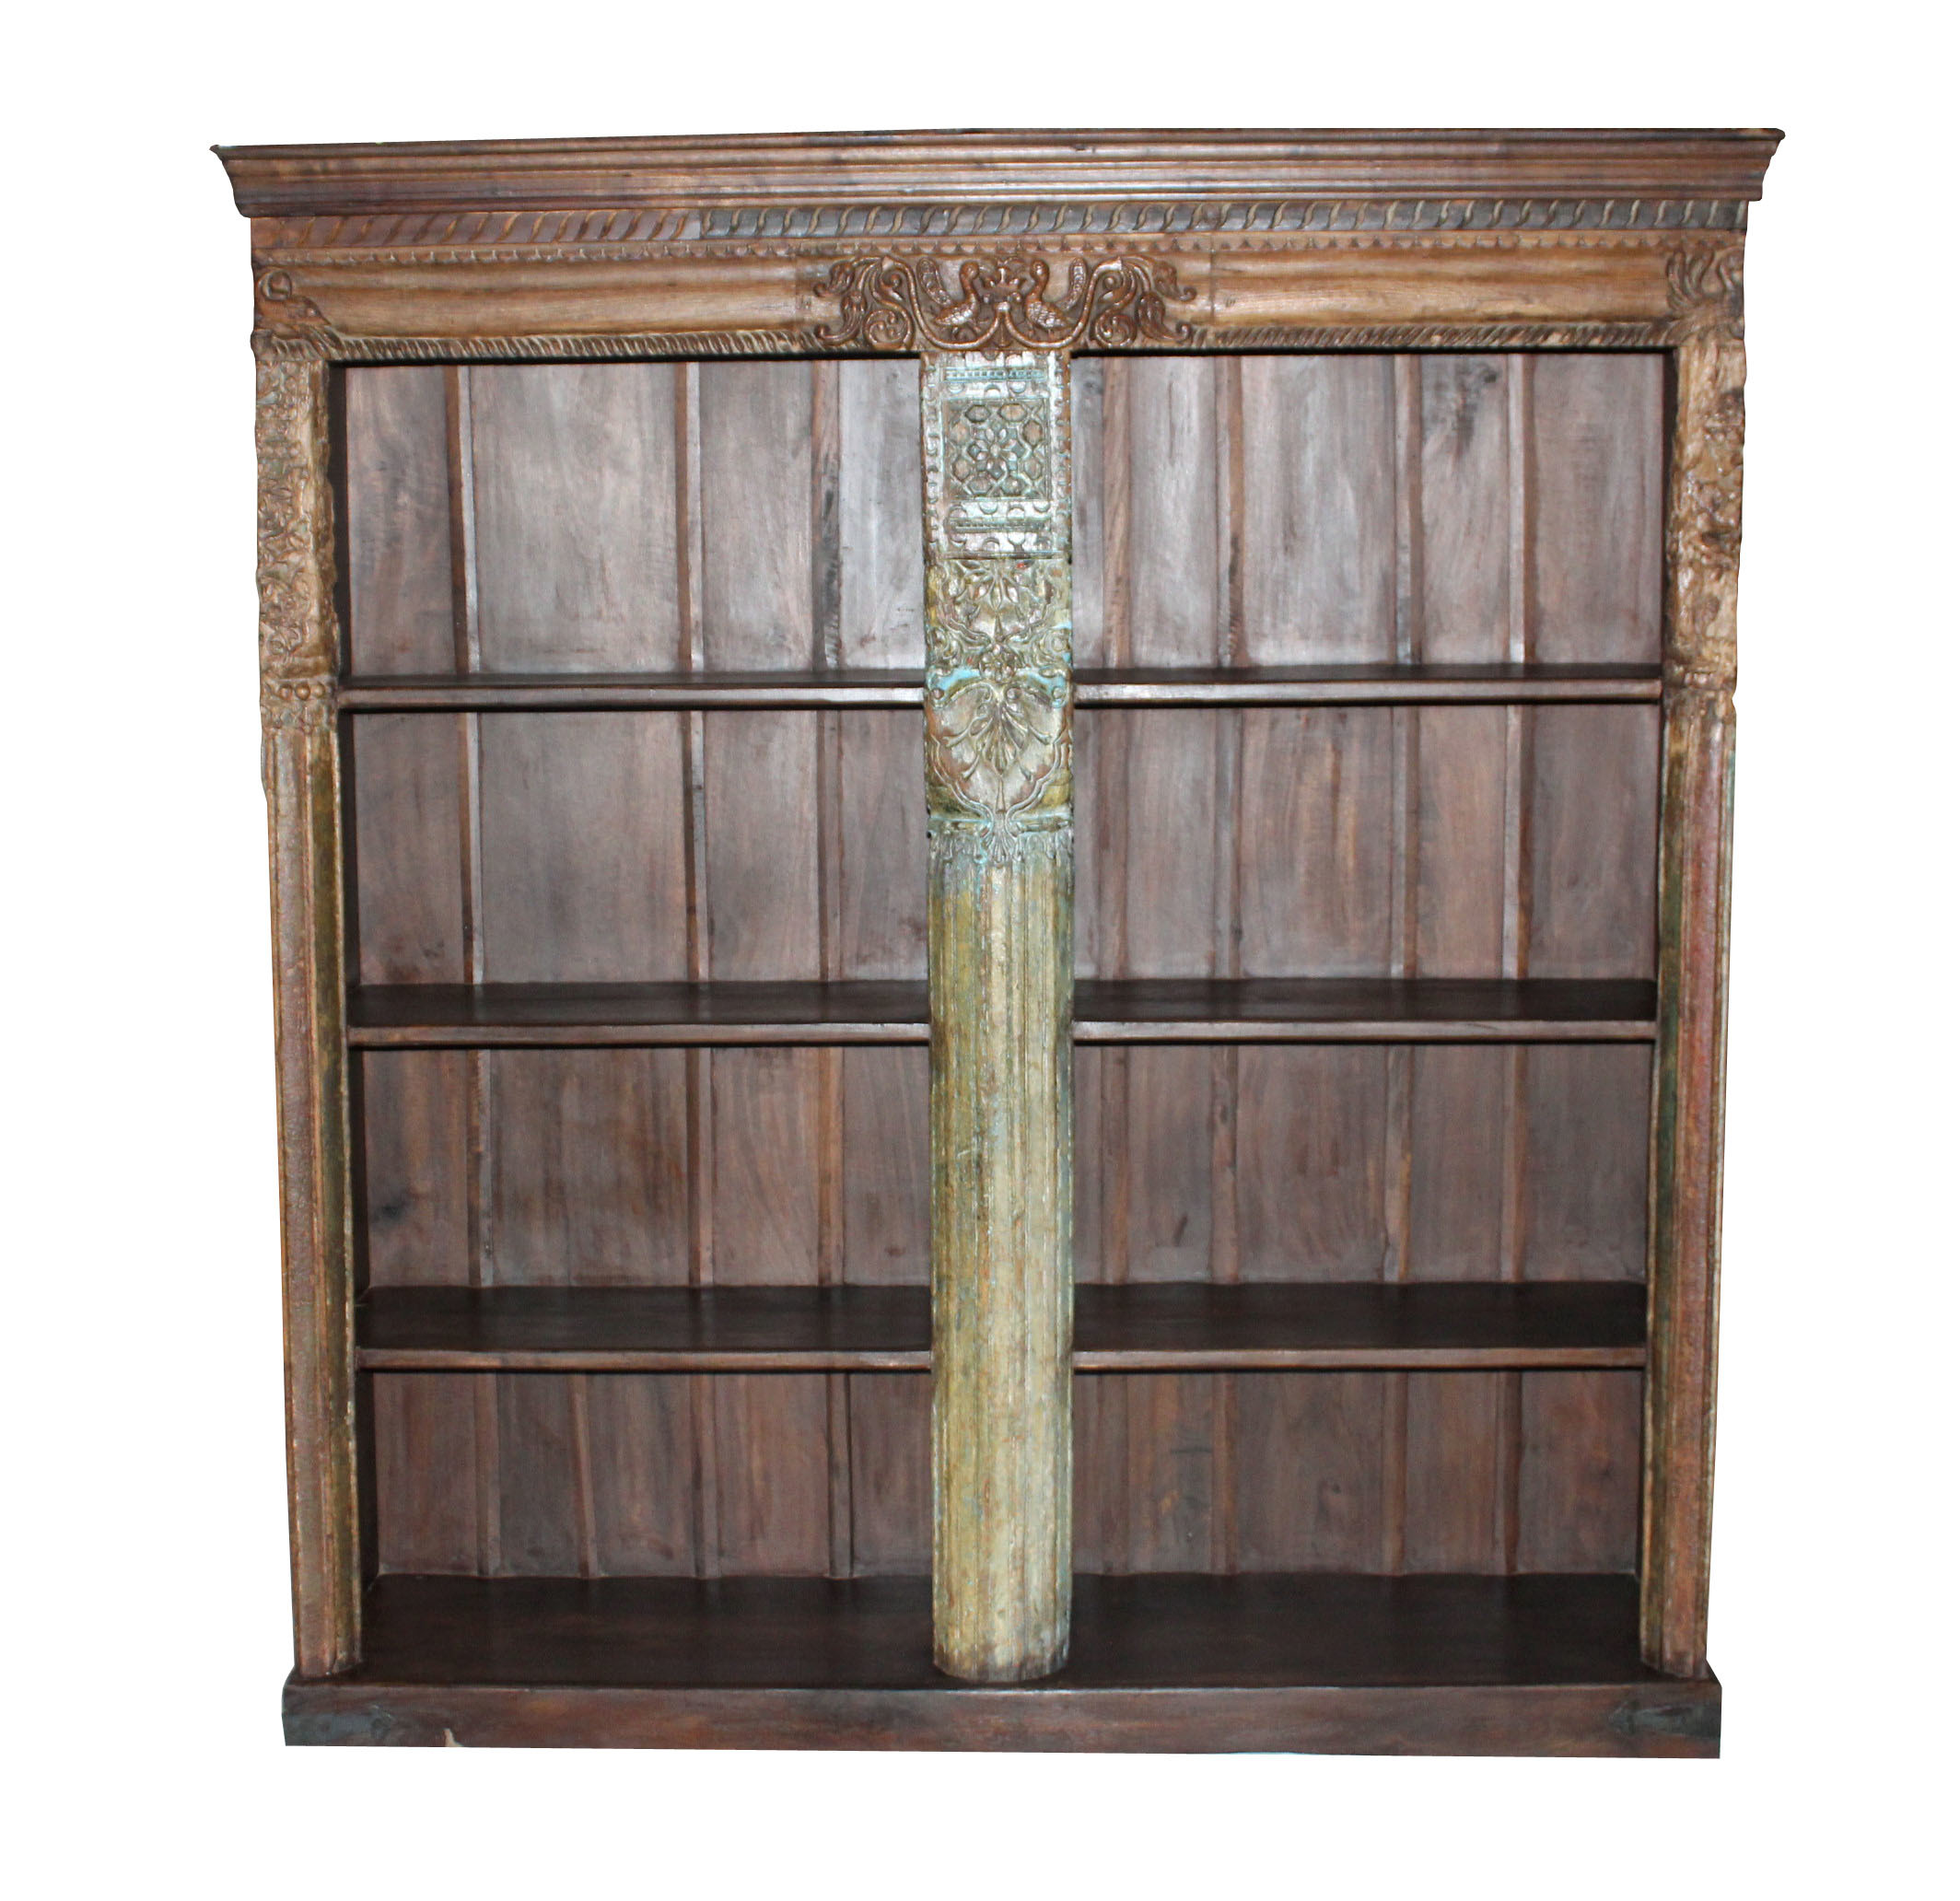 Rustic Carved Pillar Bookshelf